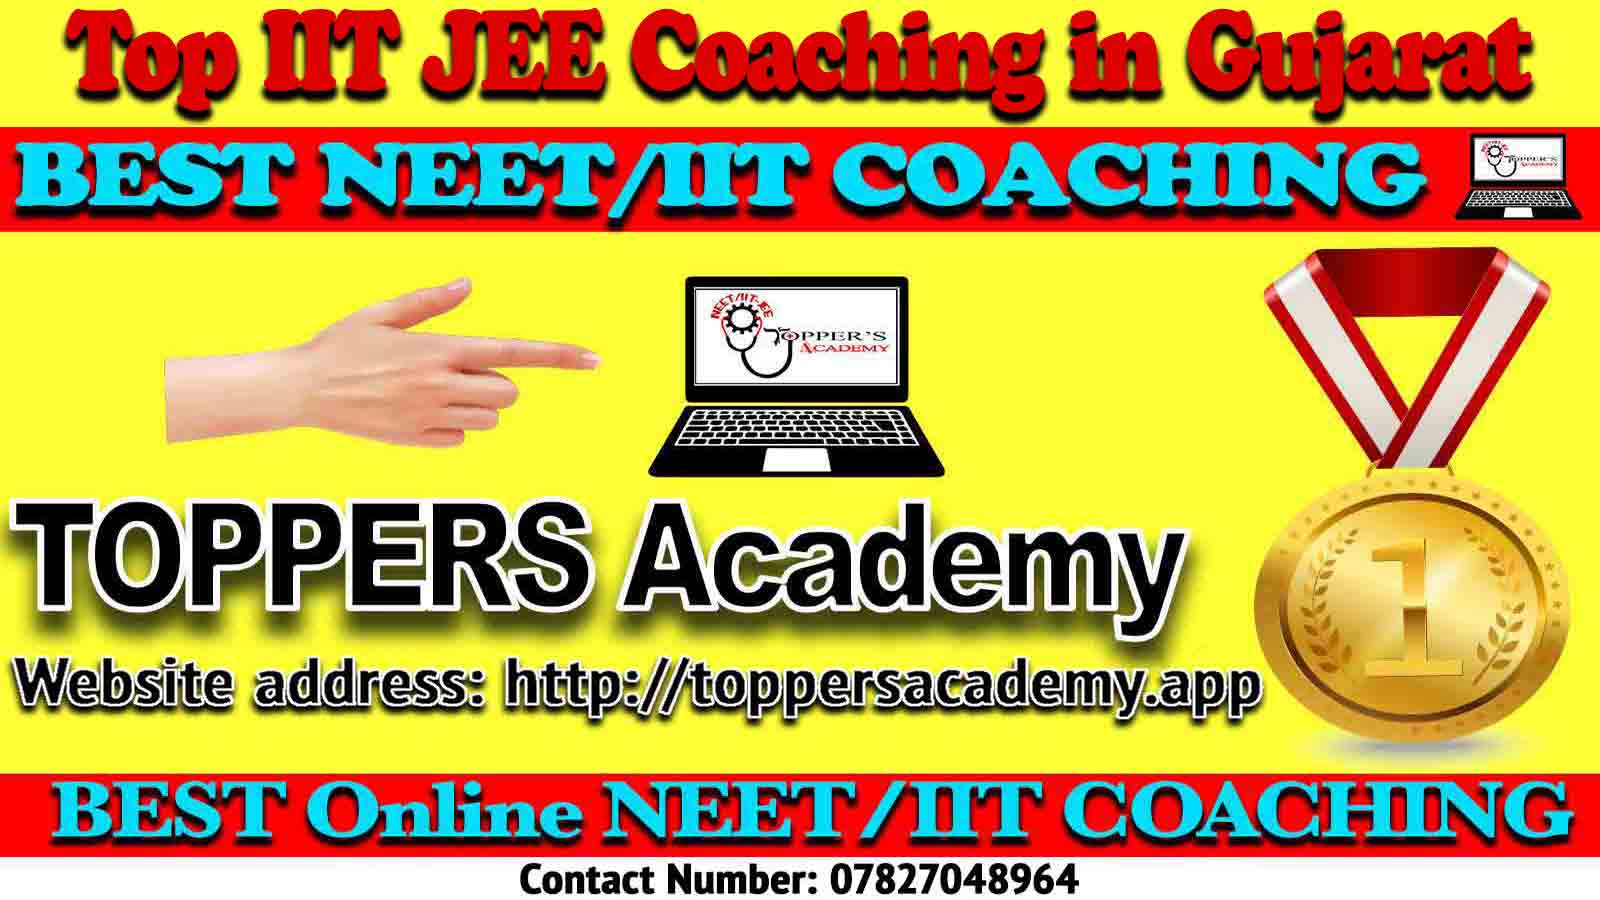 Top IIT JEE Coaching in Gujarat